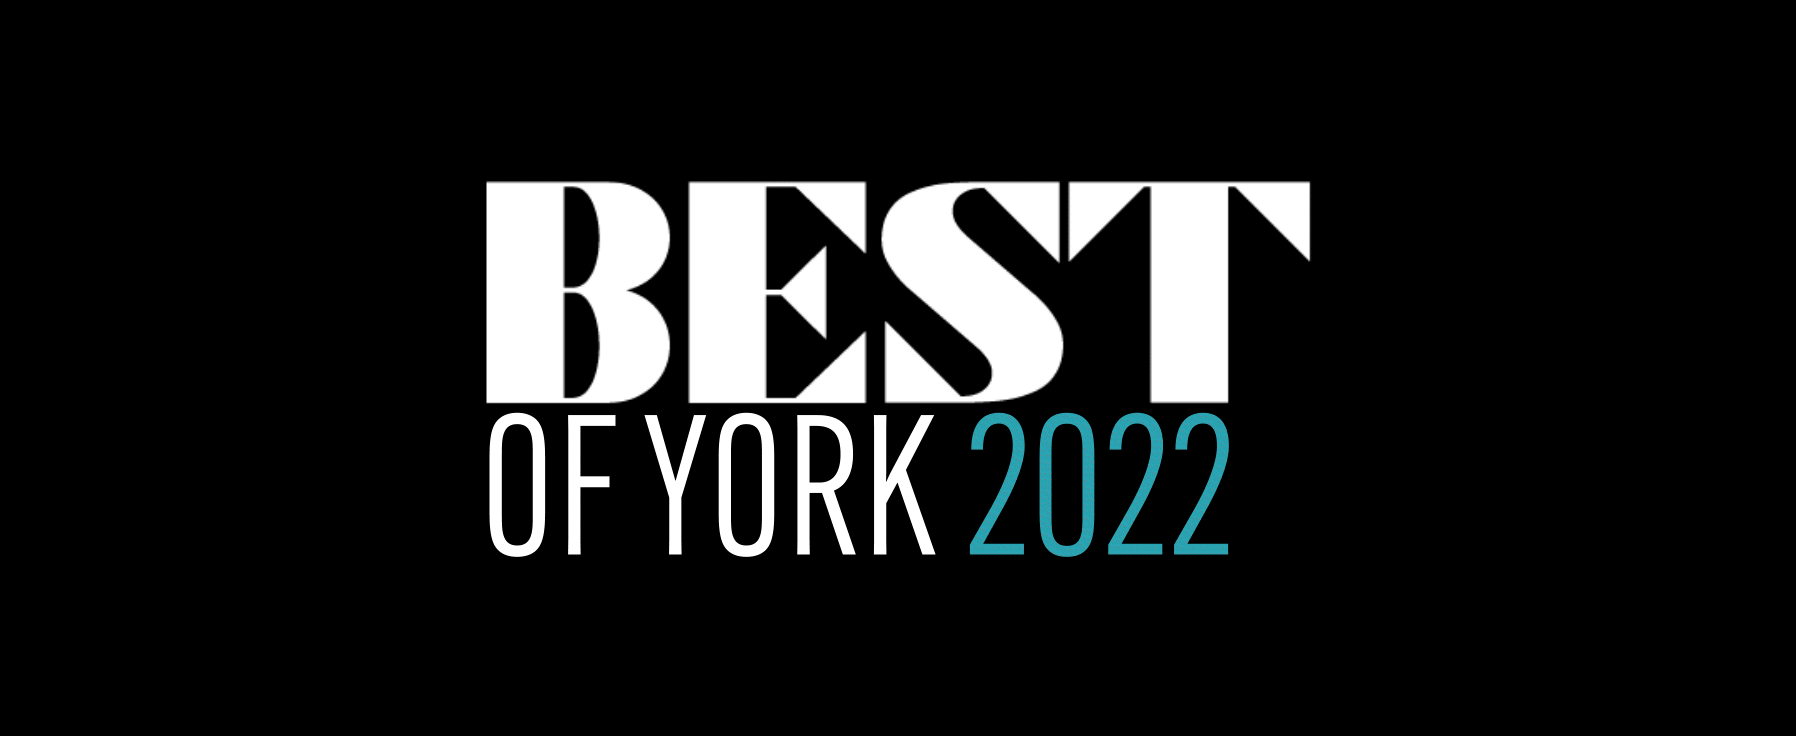 Best of York 2022 gif header